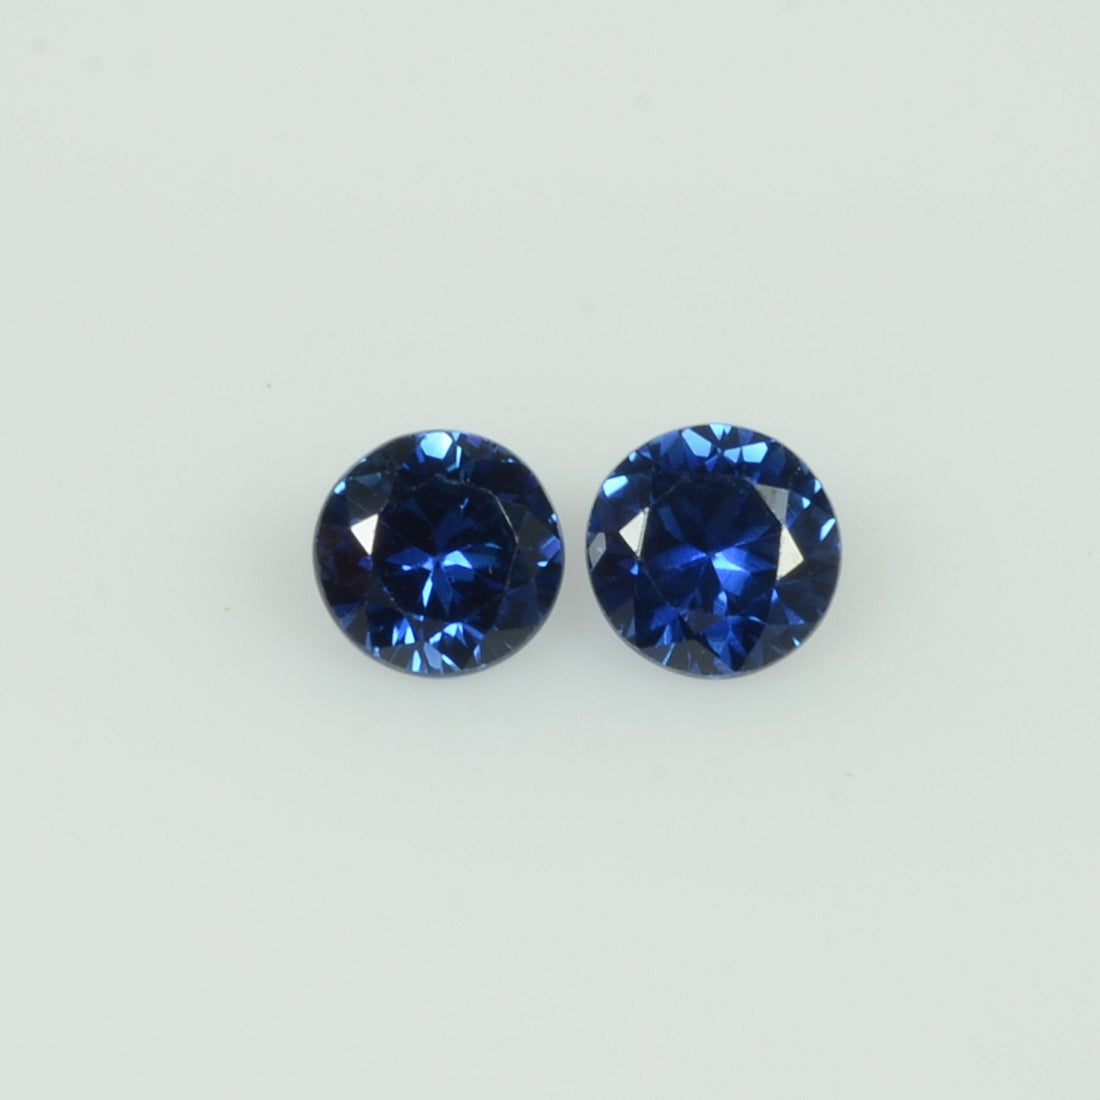 4-4.5 mm Natural Blue Sapphire Loose Gemstone Round Diamond Cut - Thai Gems Export Ltd.